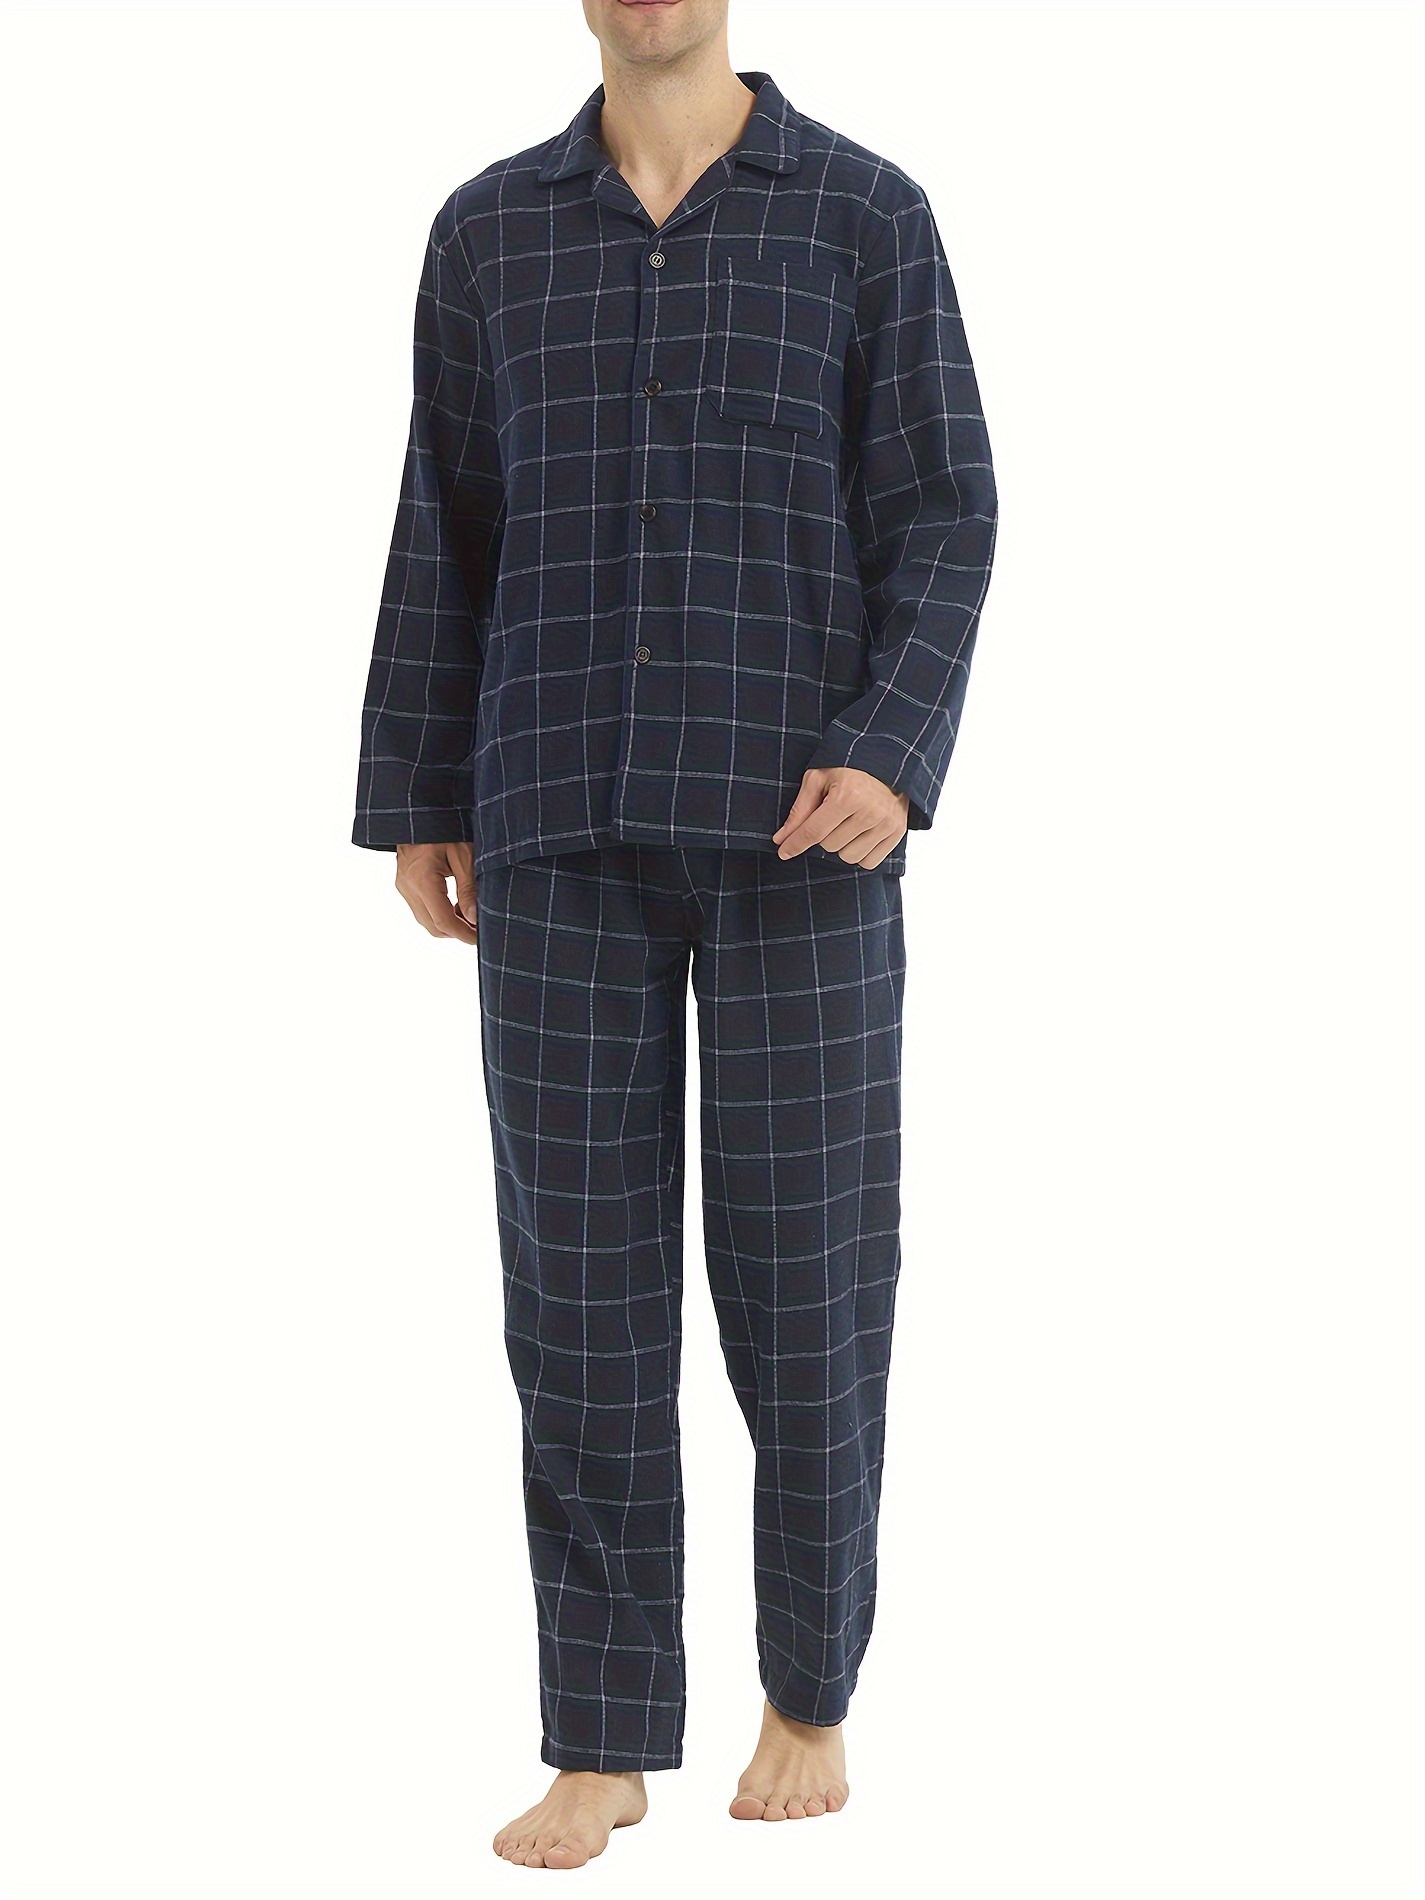 London Fog Mens Nightwear Comfy Pajama Sets